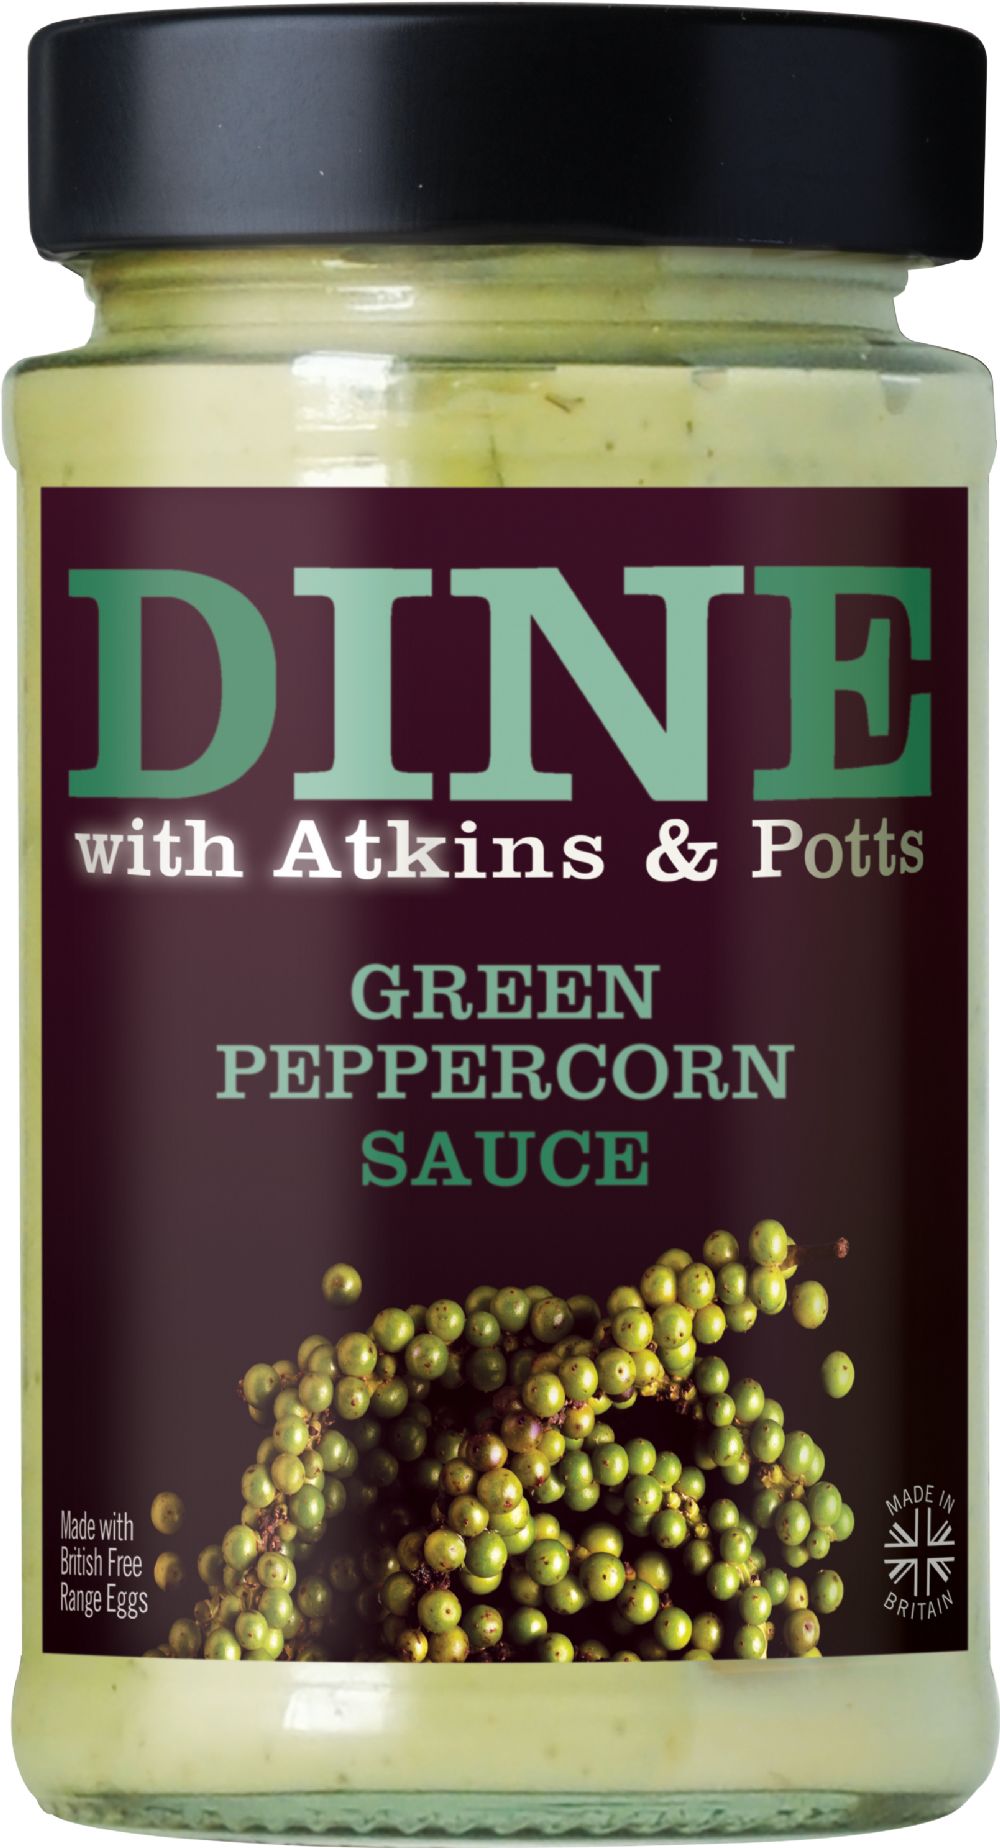 Atkins & Potts Green Peppercorn Sauce